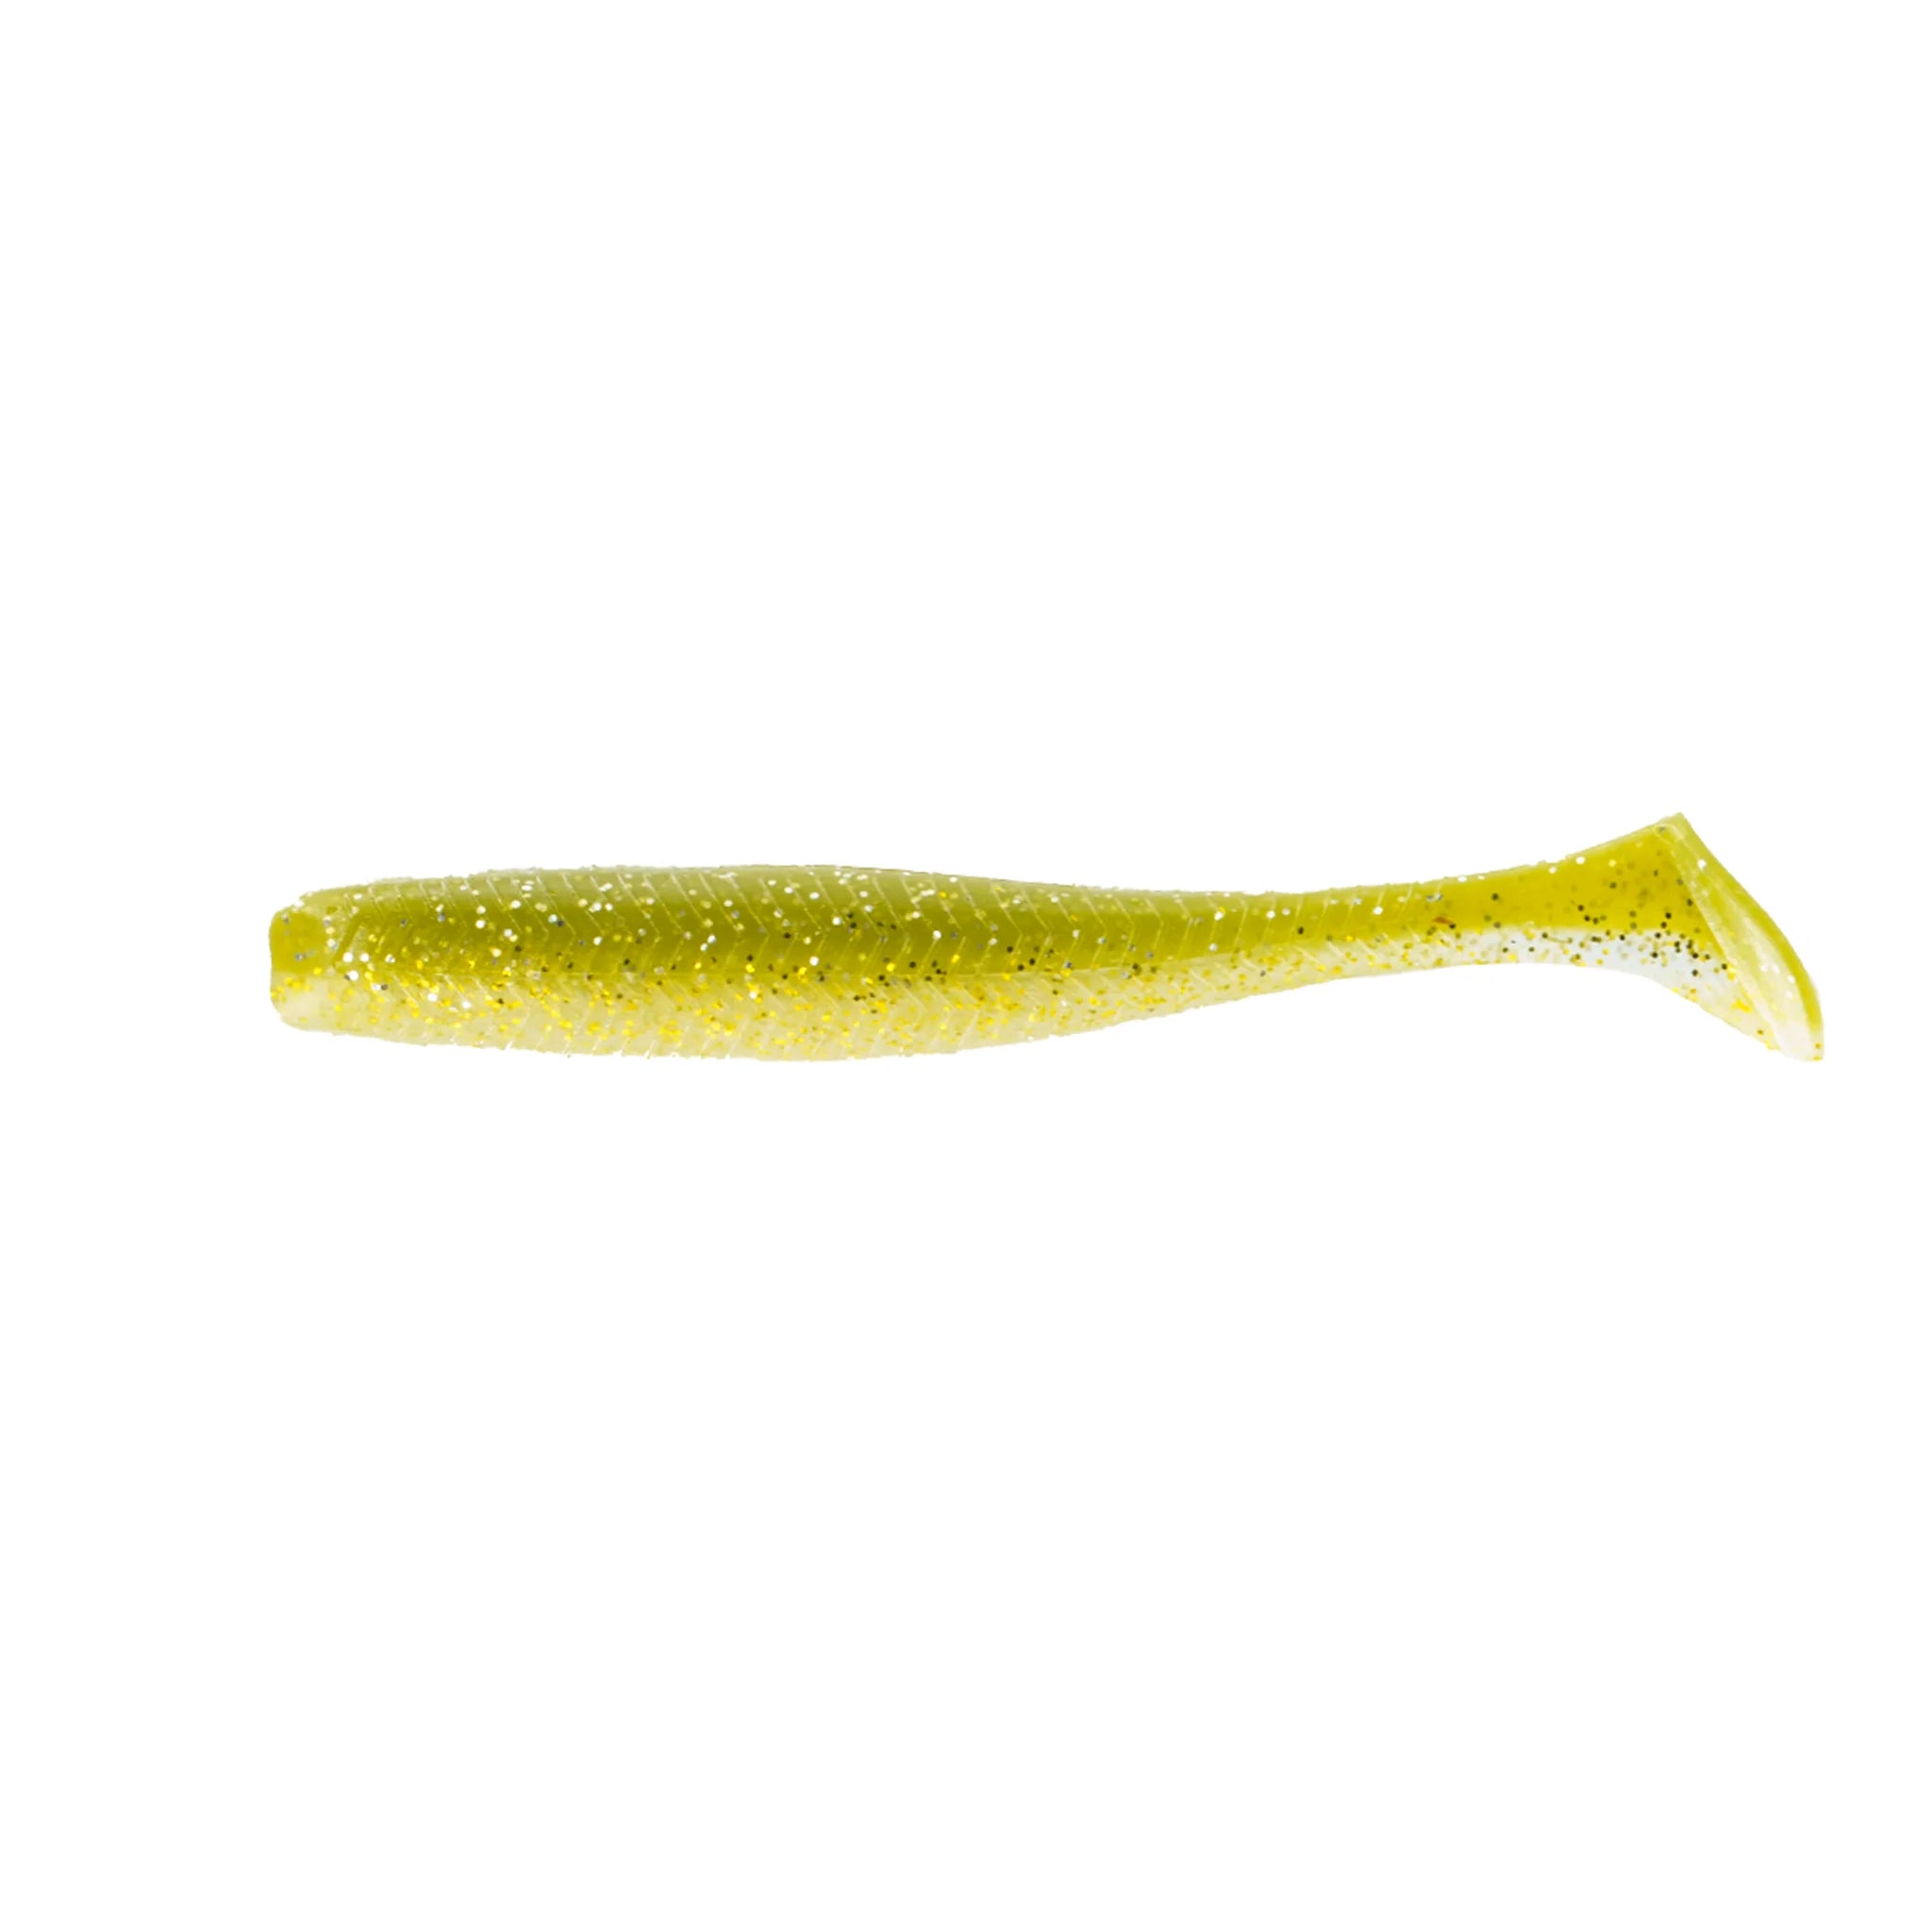 Swim Bait Split Soft Tail 5.5 inch Yellow White with Vertical St